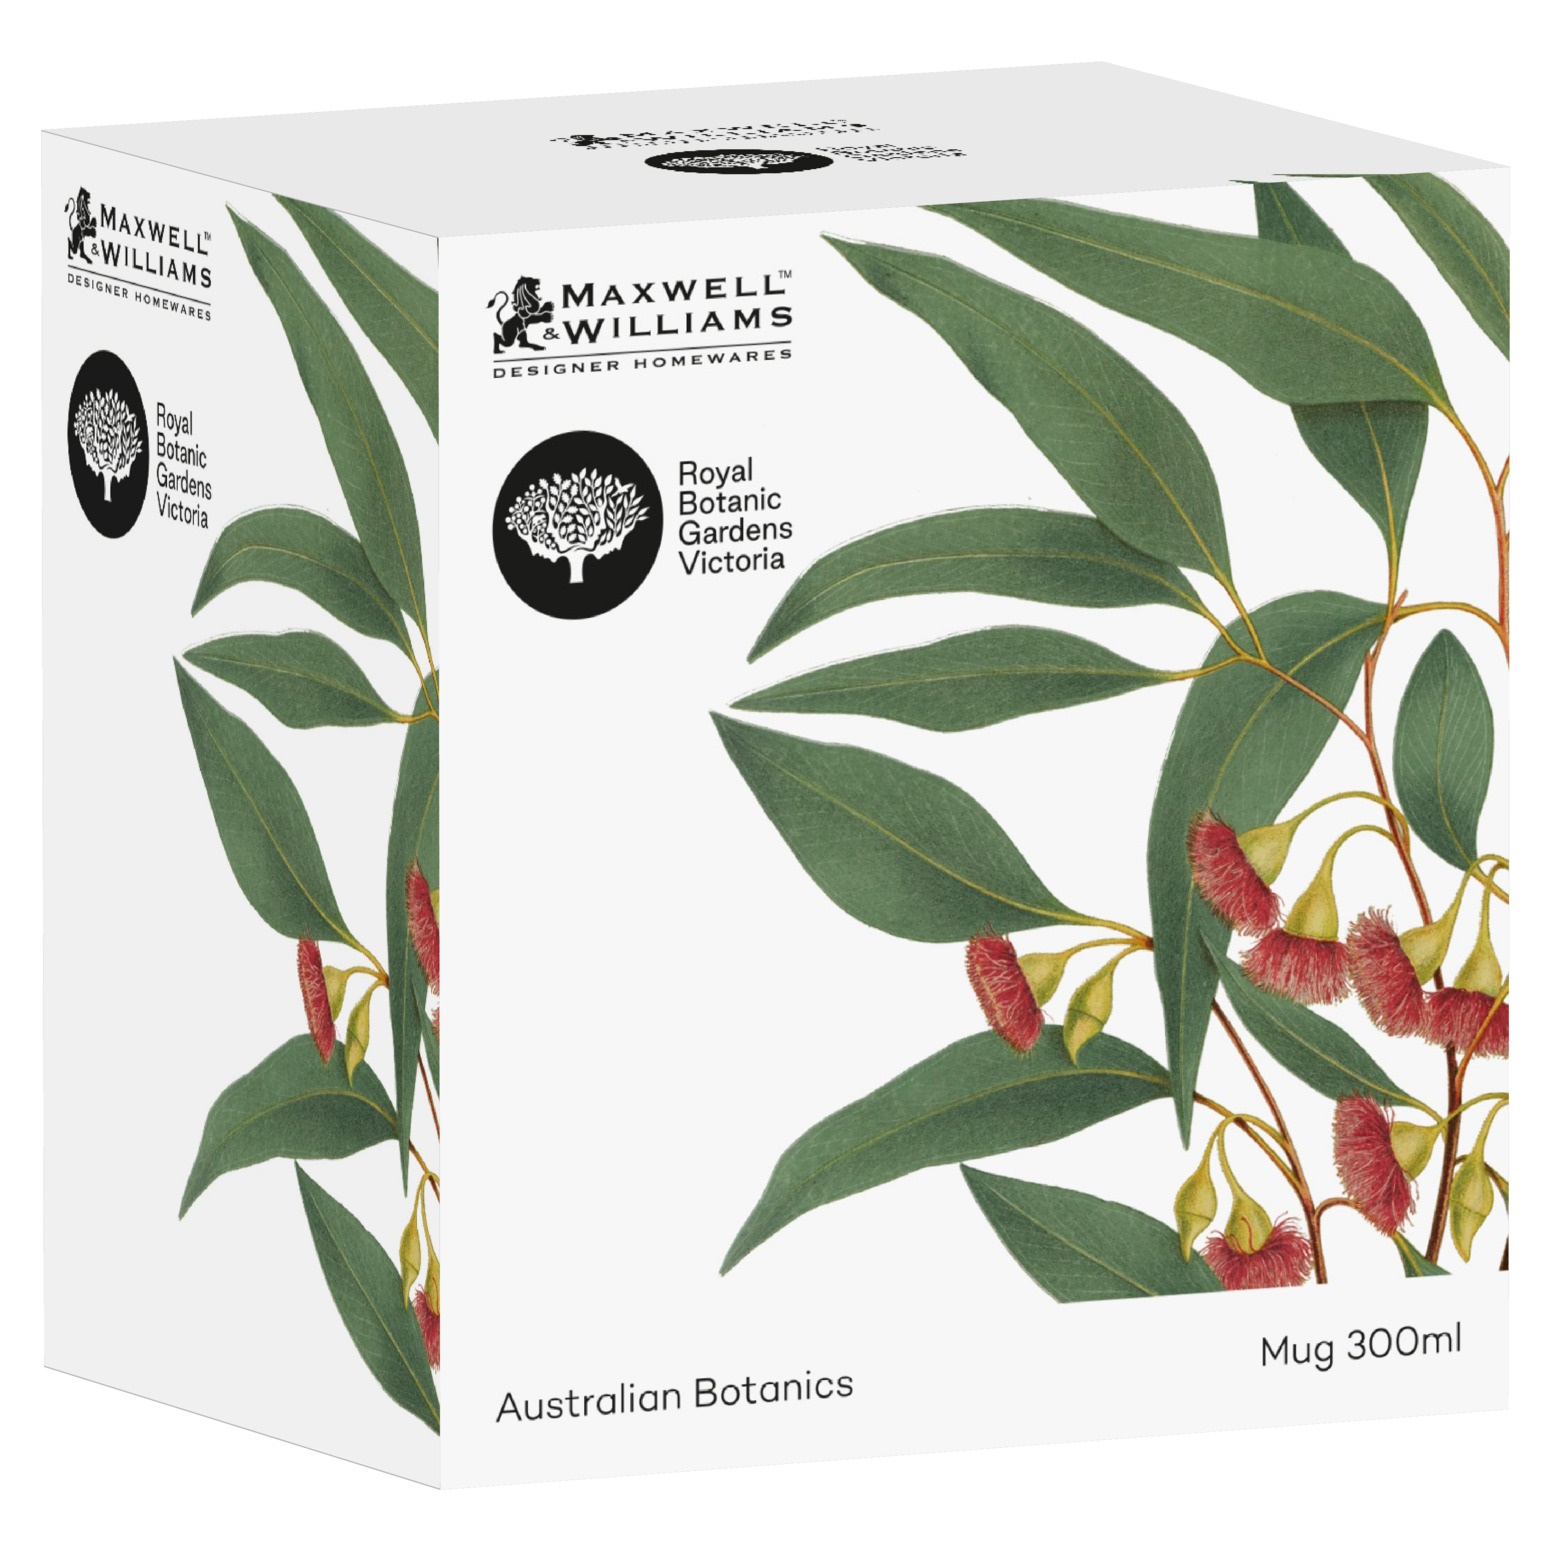 Maxwell Williams Royal Botanic Gardens Australian Botanics Mug Gum 300ML Gift Boxed